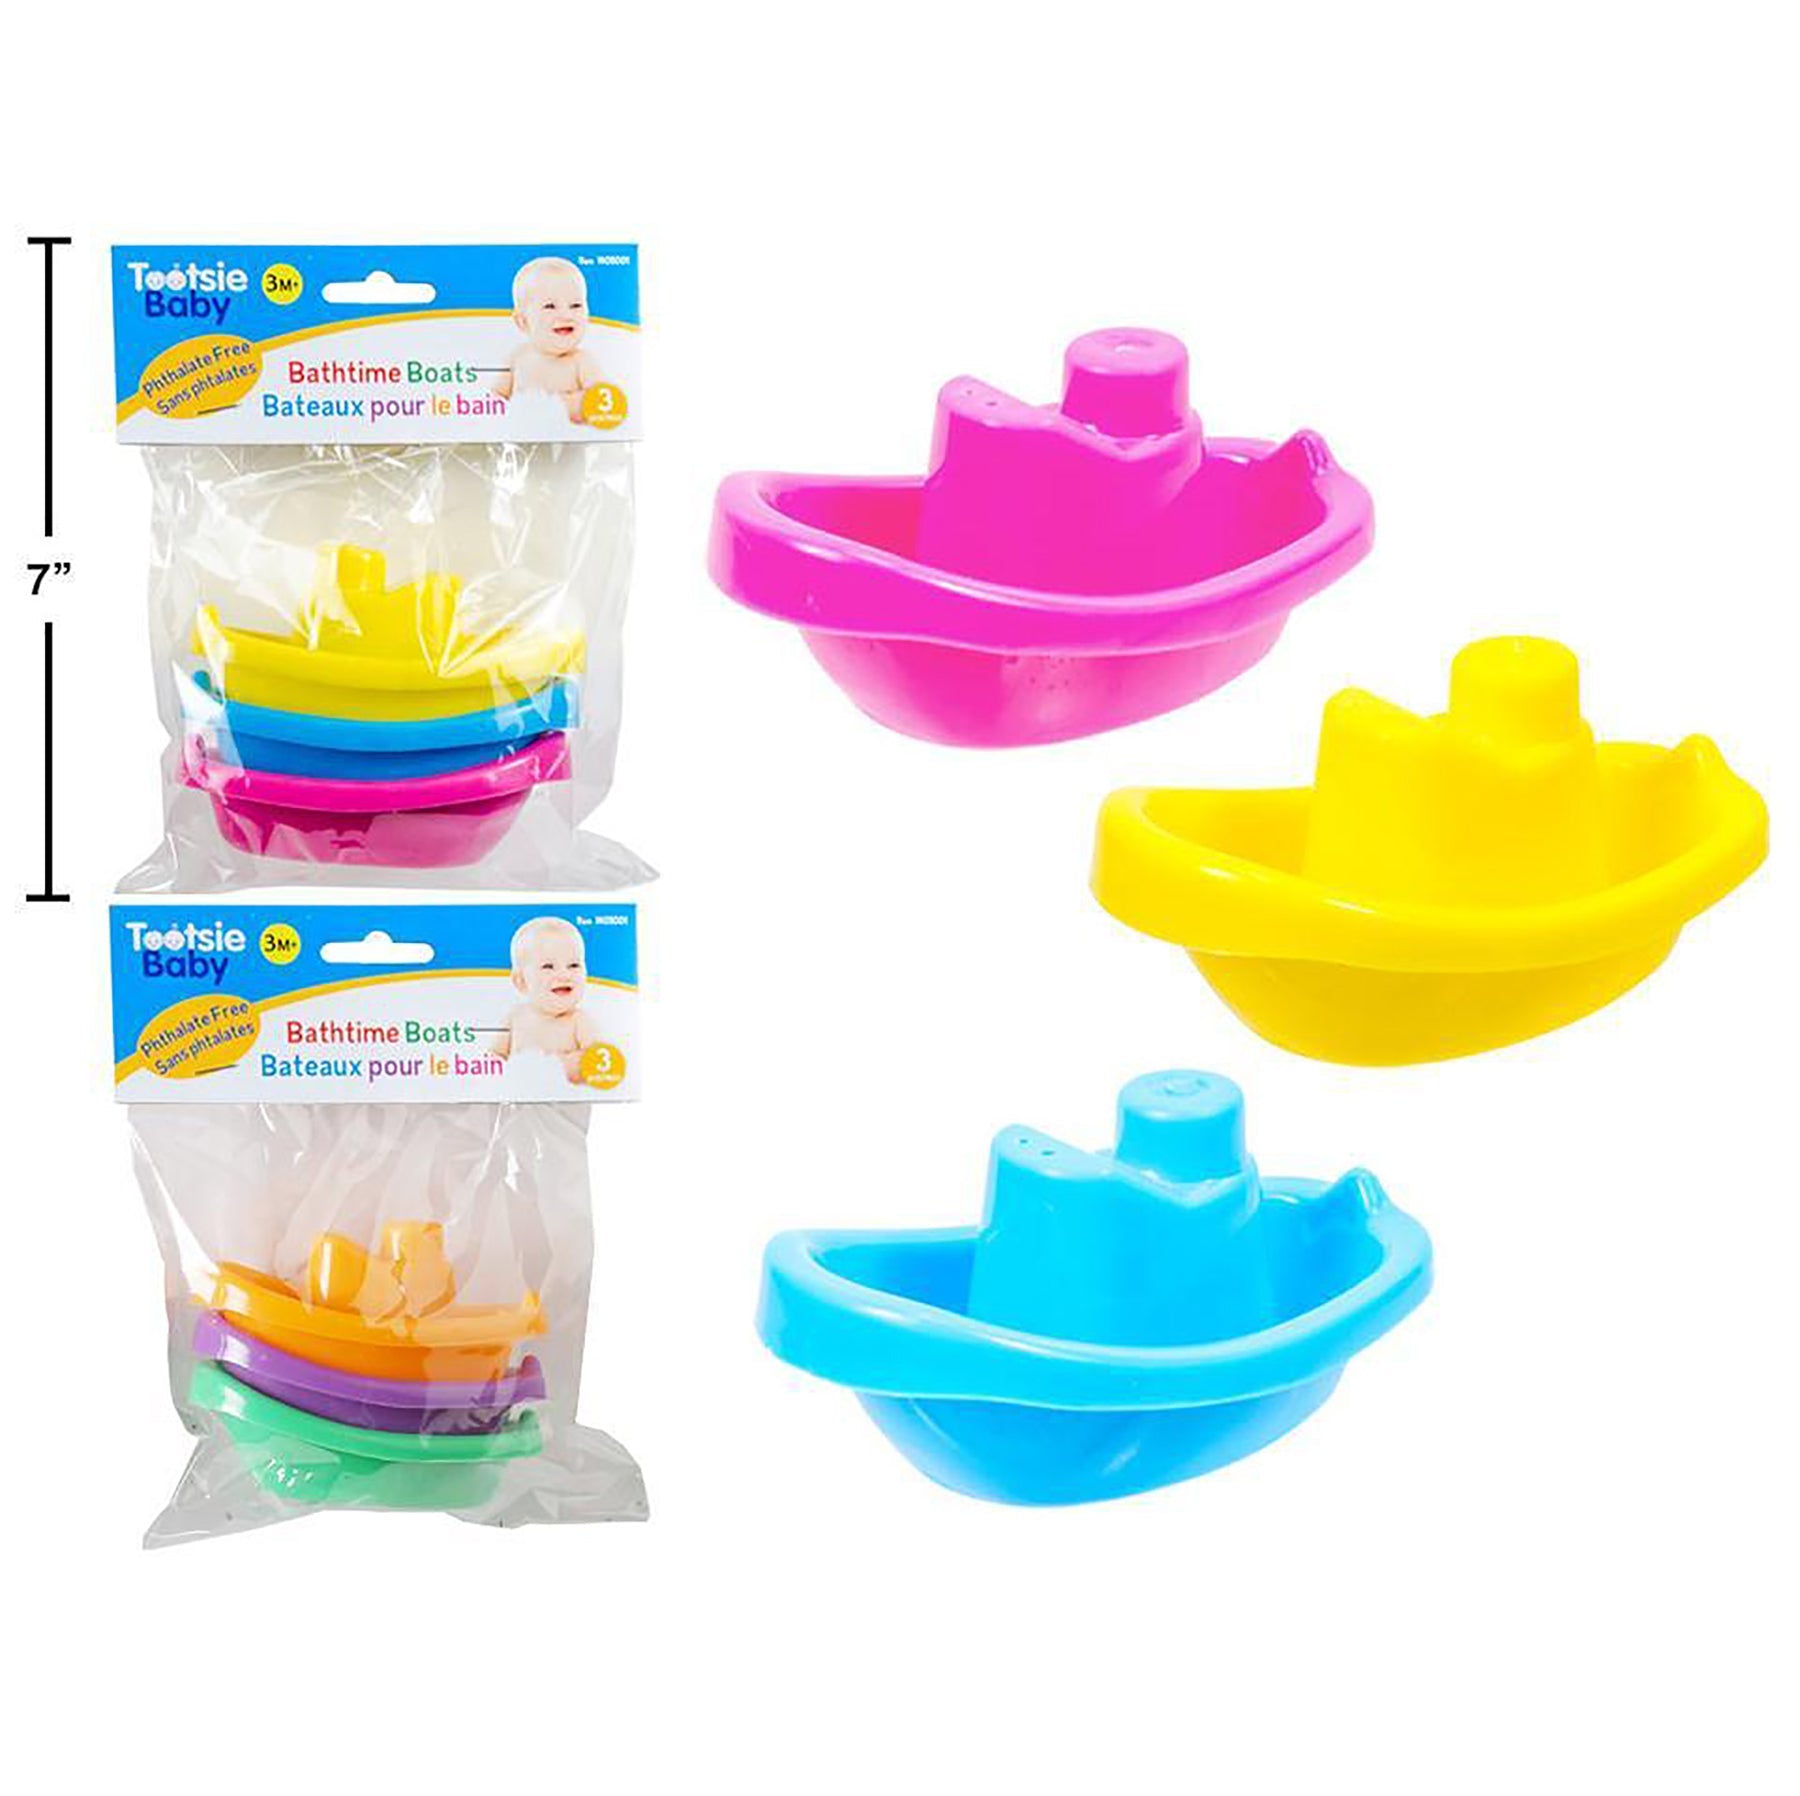 Tootsie Baby 3 Bathtime Plastic Boats 4x2in